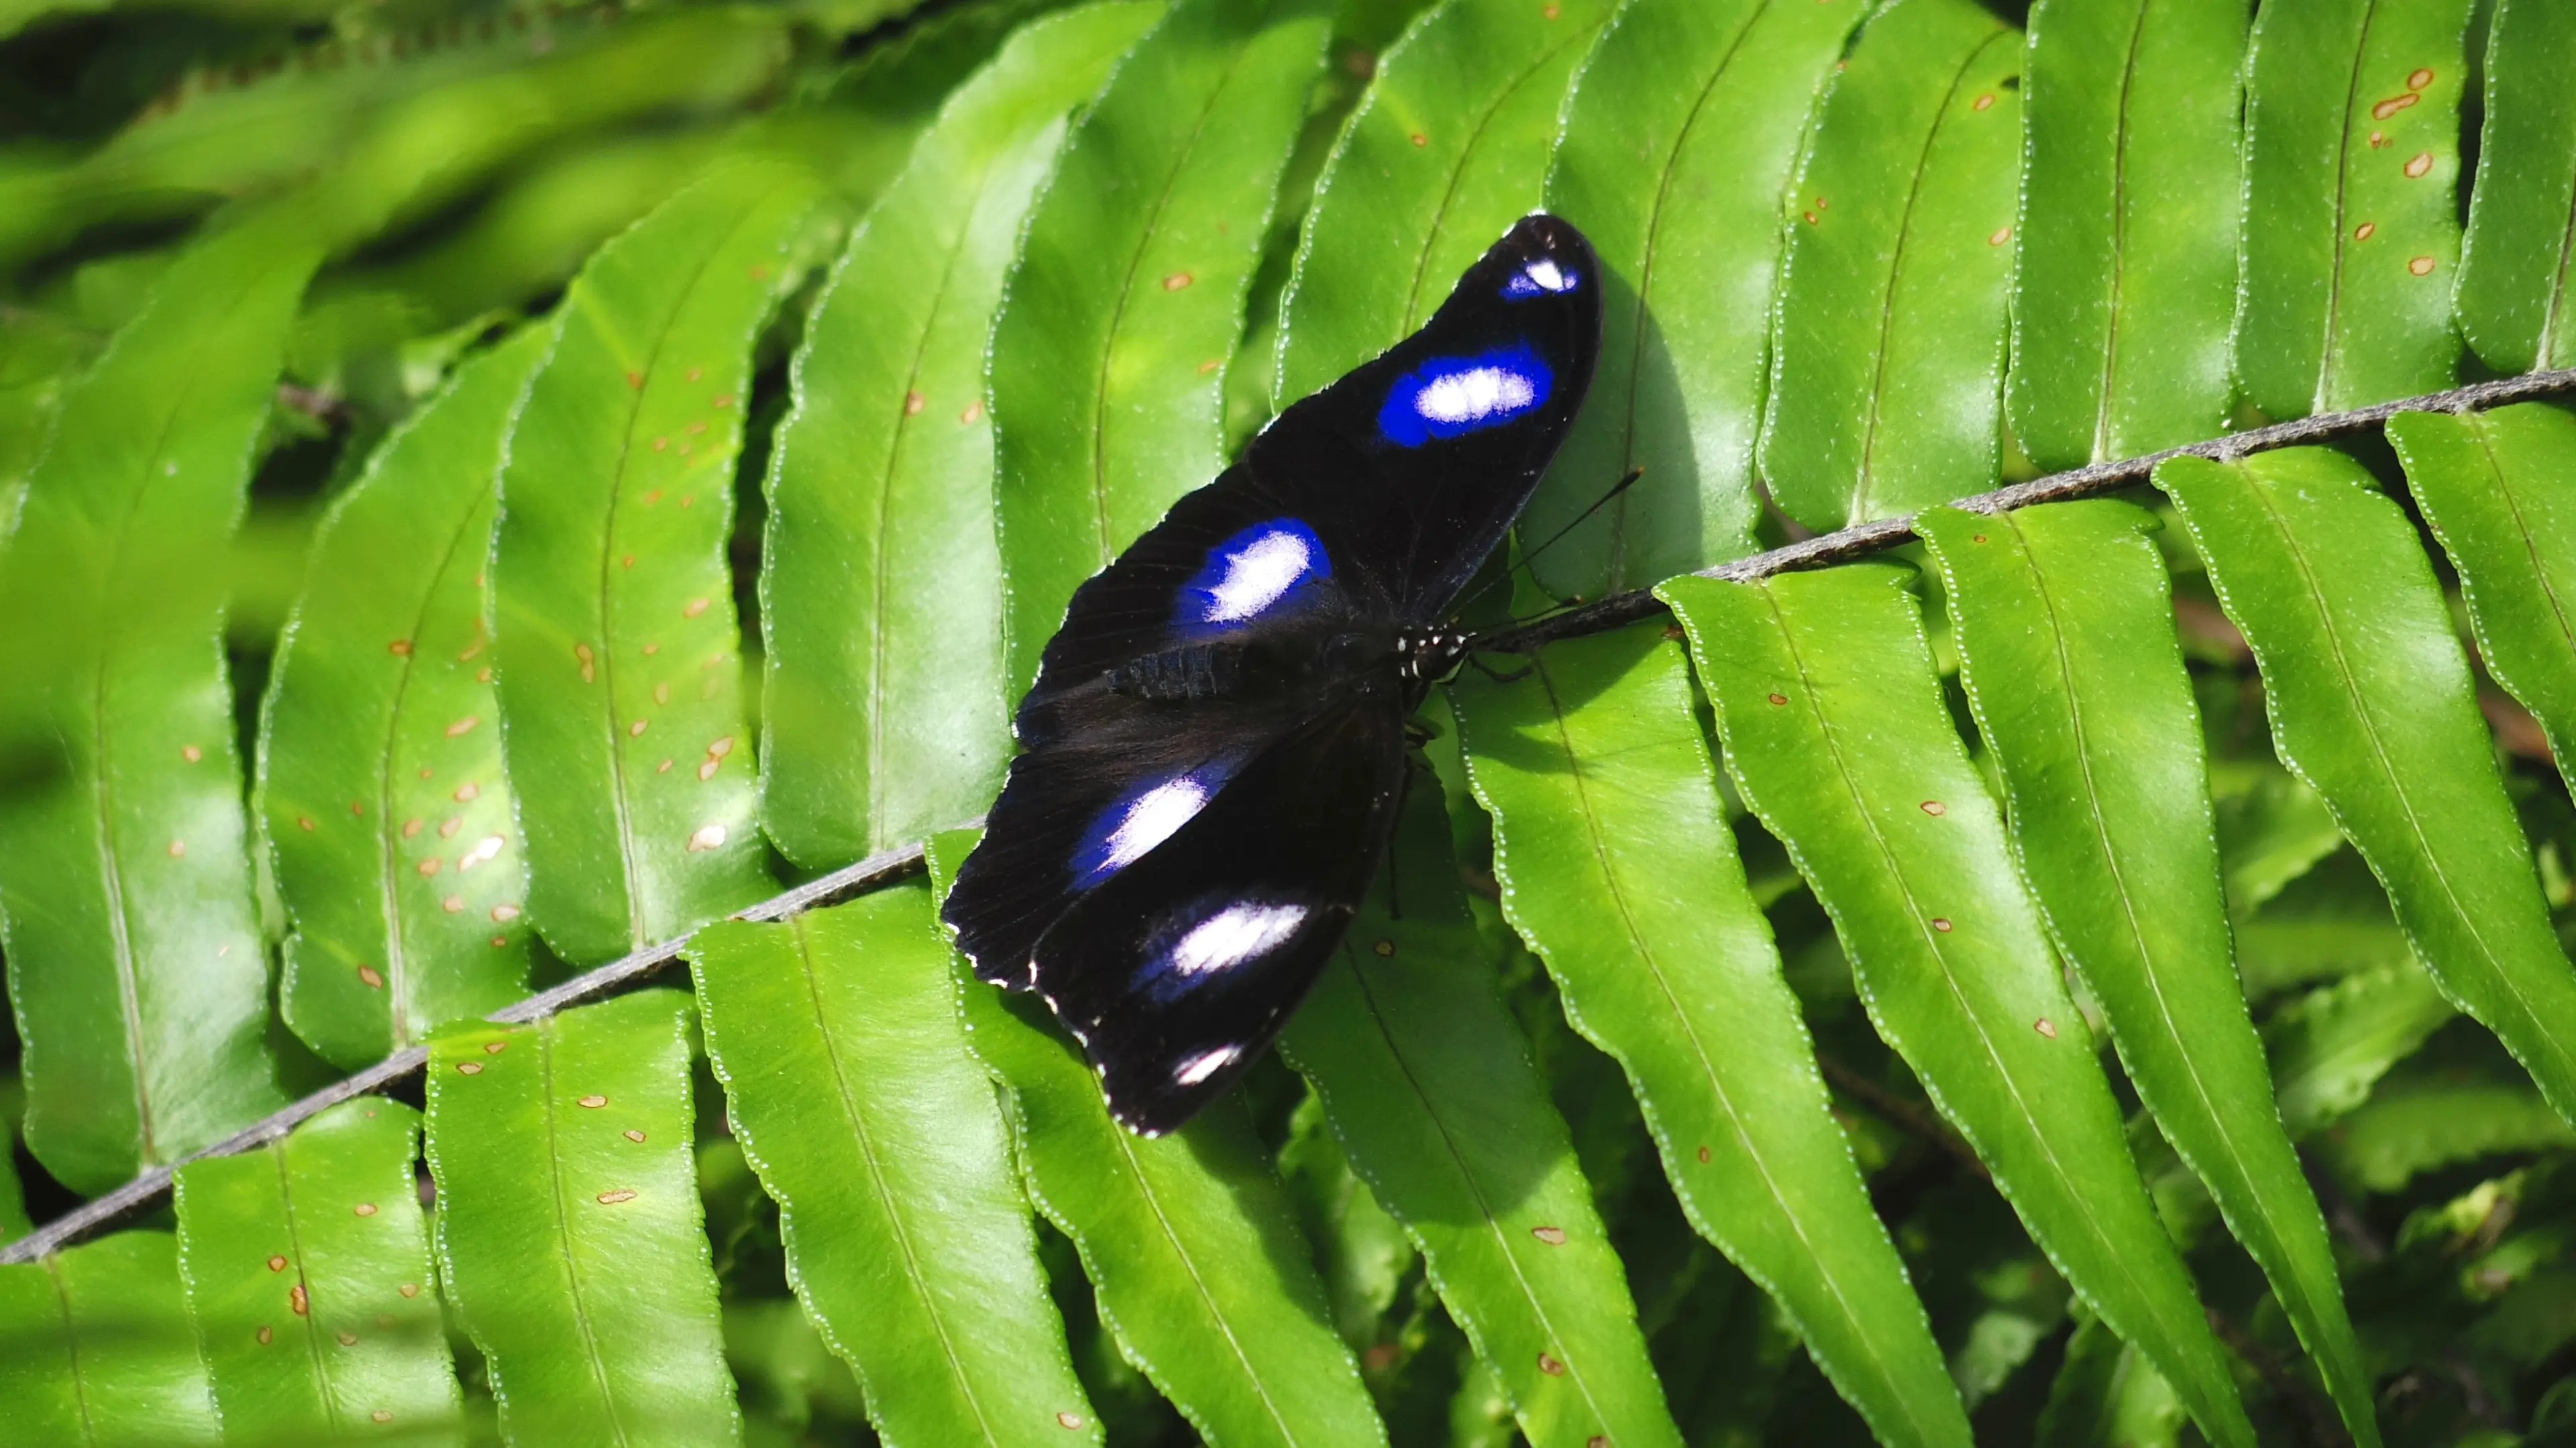 Kuranda Butterfly Sanctuary